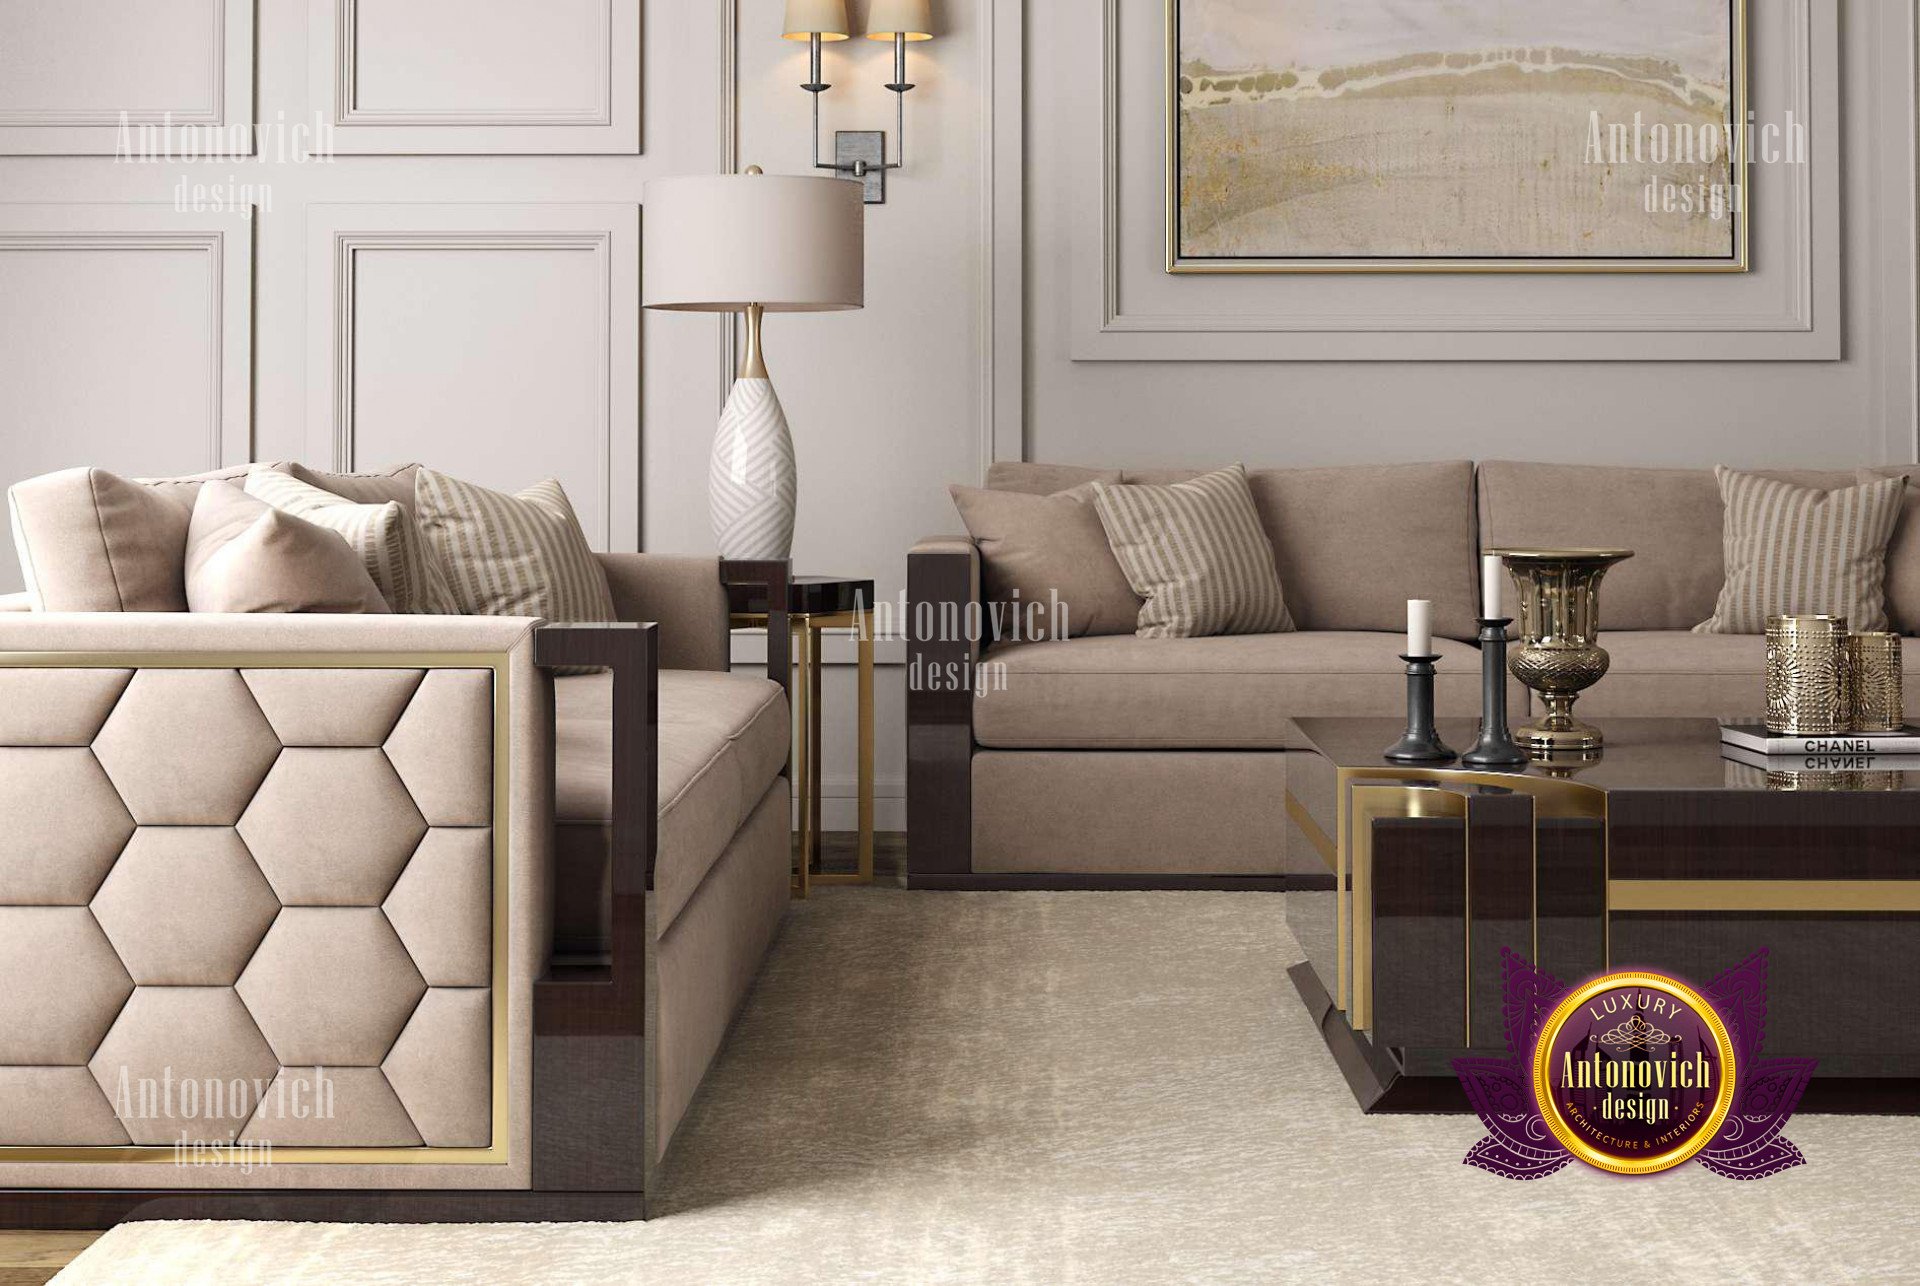 Best classic furniture - luxury interior design company in